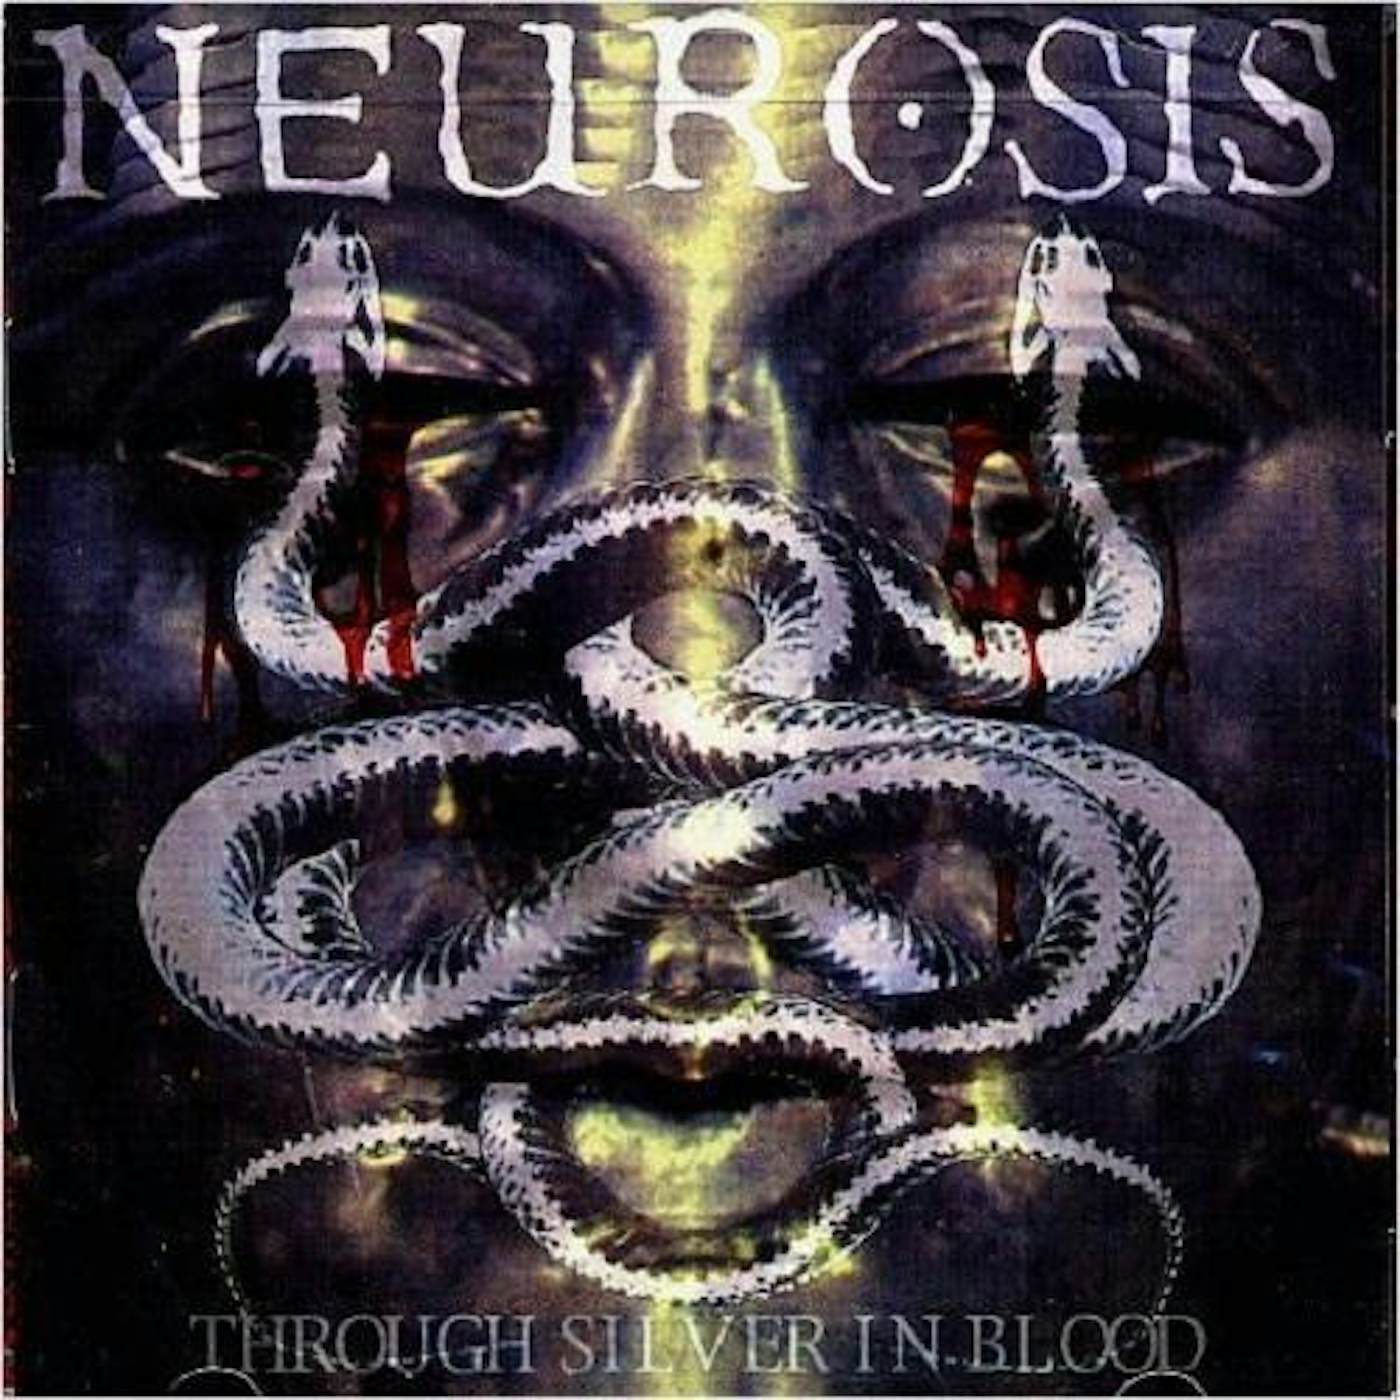 Neurosis "Through Silver And Blood" CD